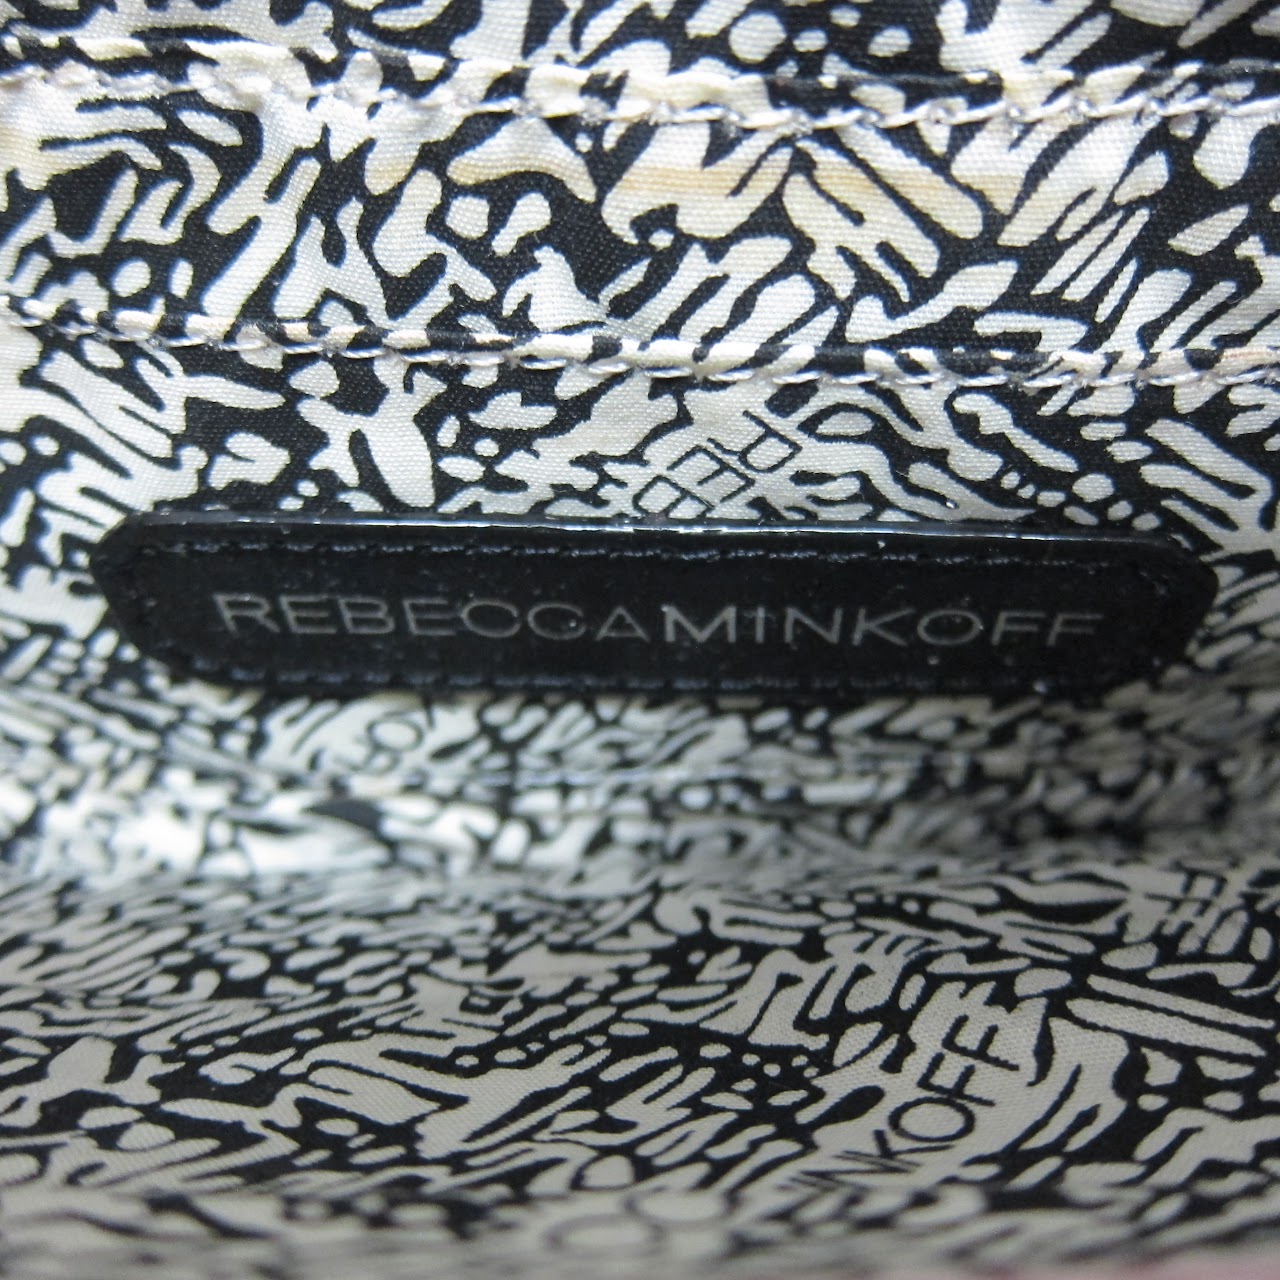 Rebecca Minkoff Woven Leather Clutch